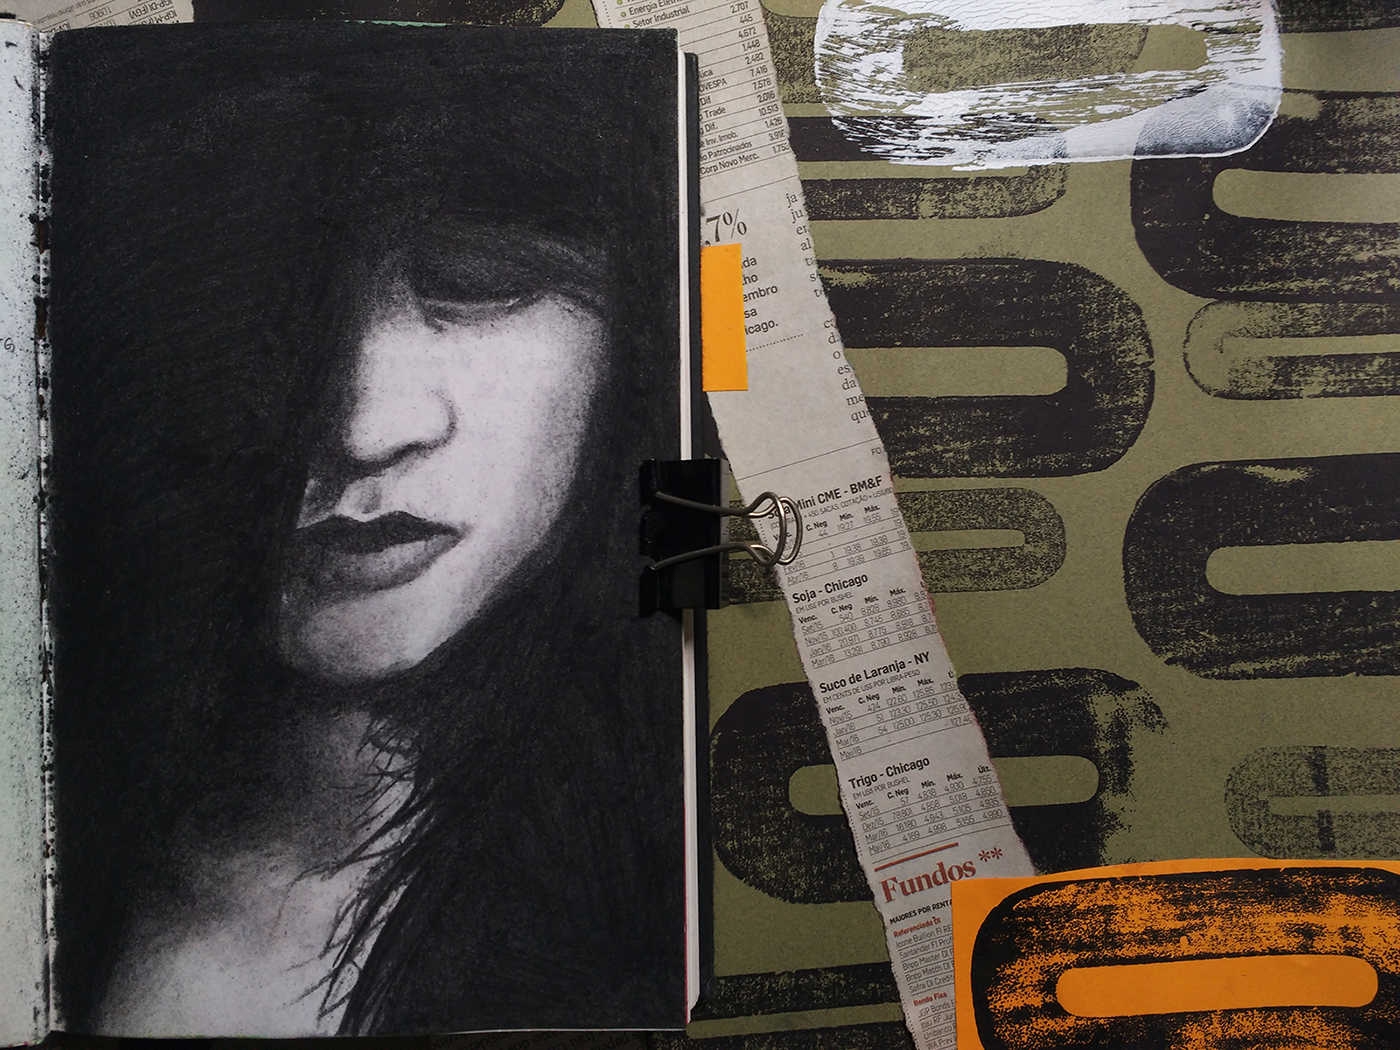 sketch sketchbook watercolors charcoal moleskine lovecraft zombie Kim jong un simpsons